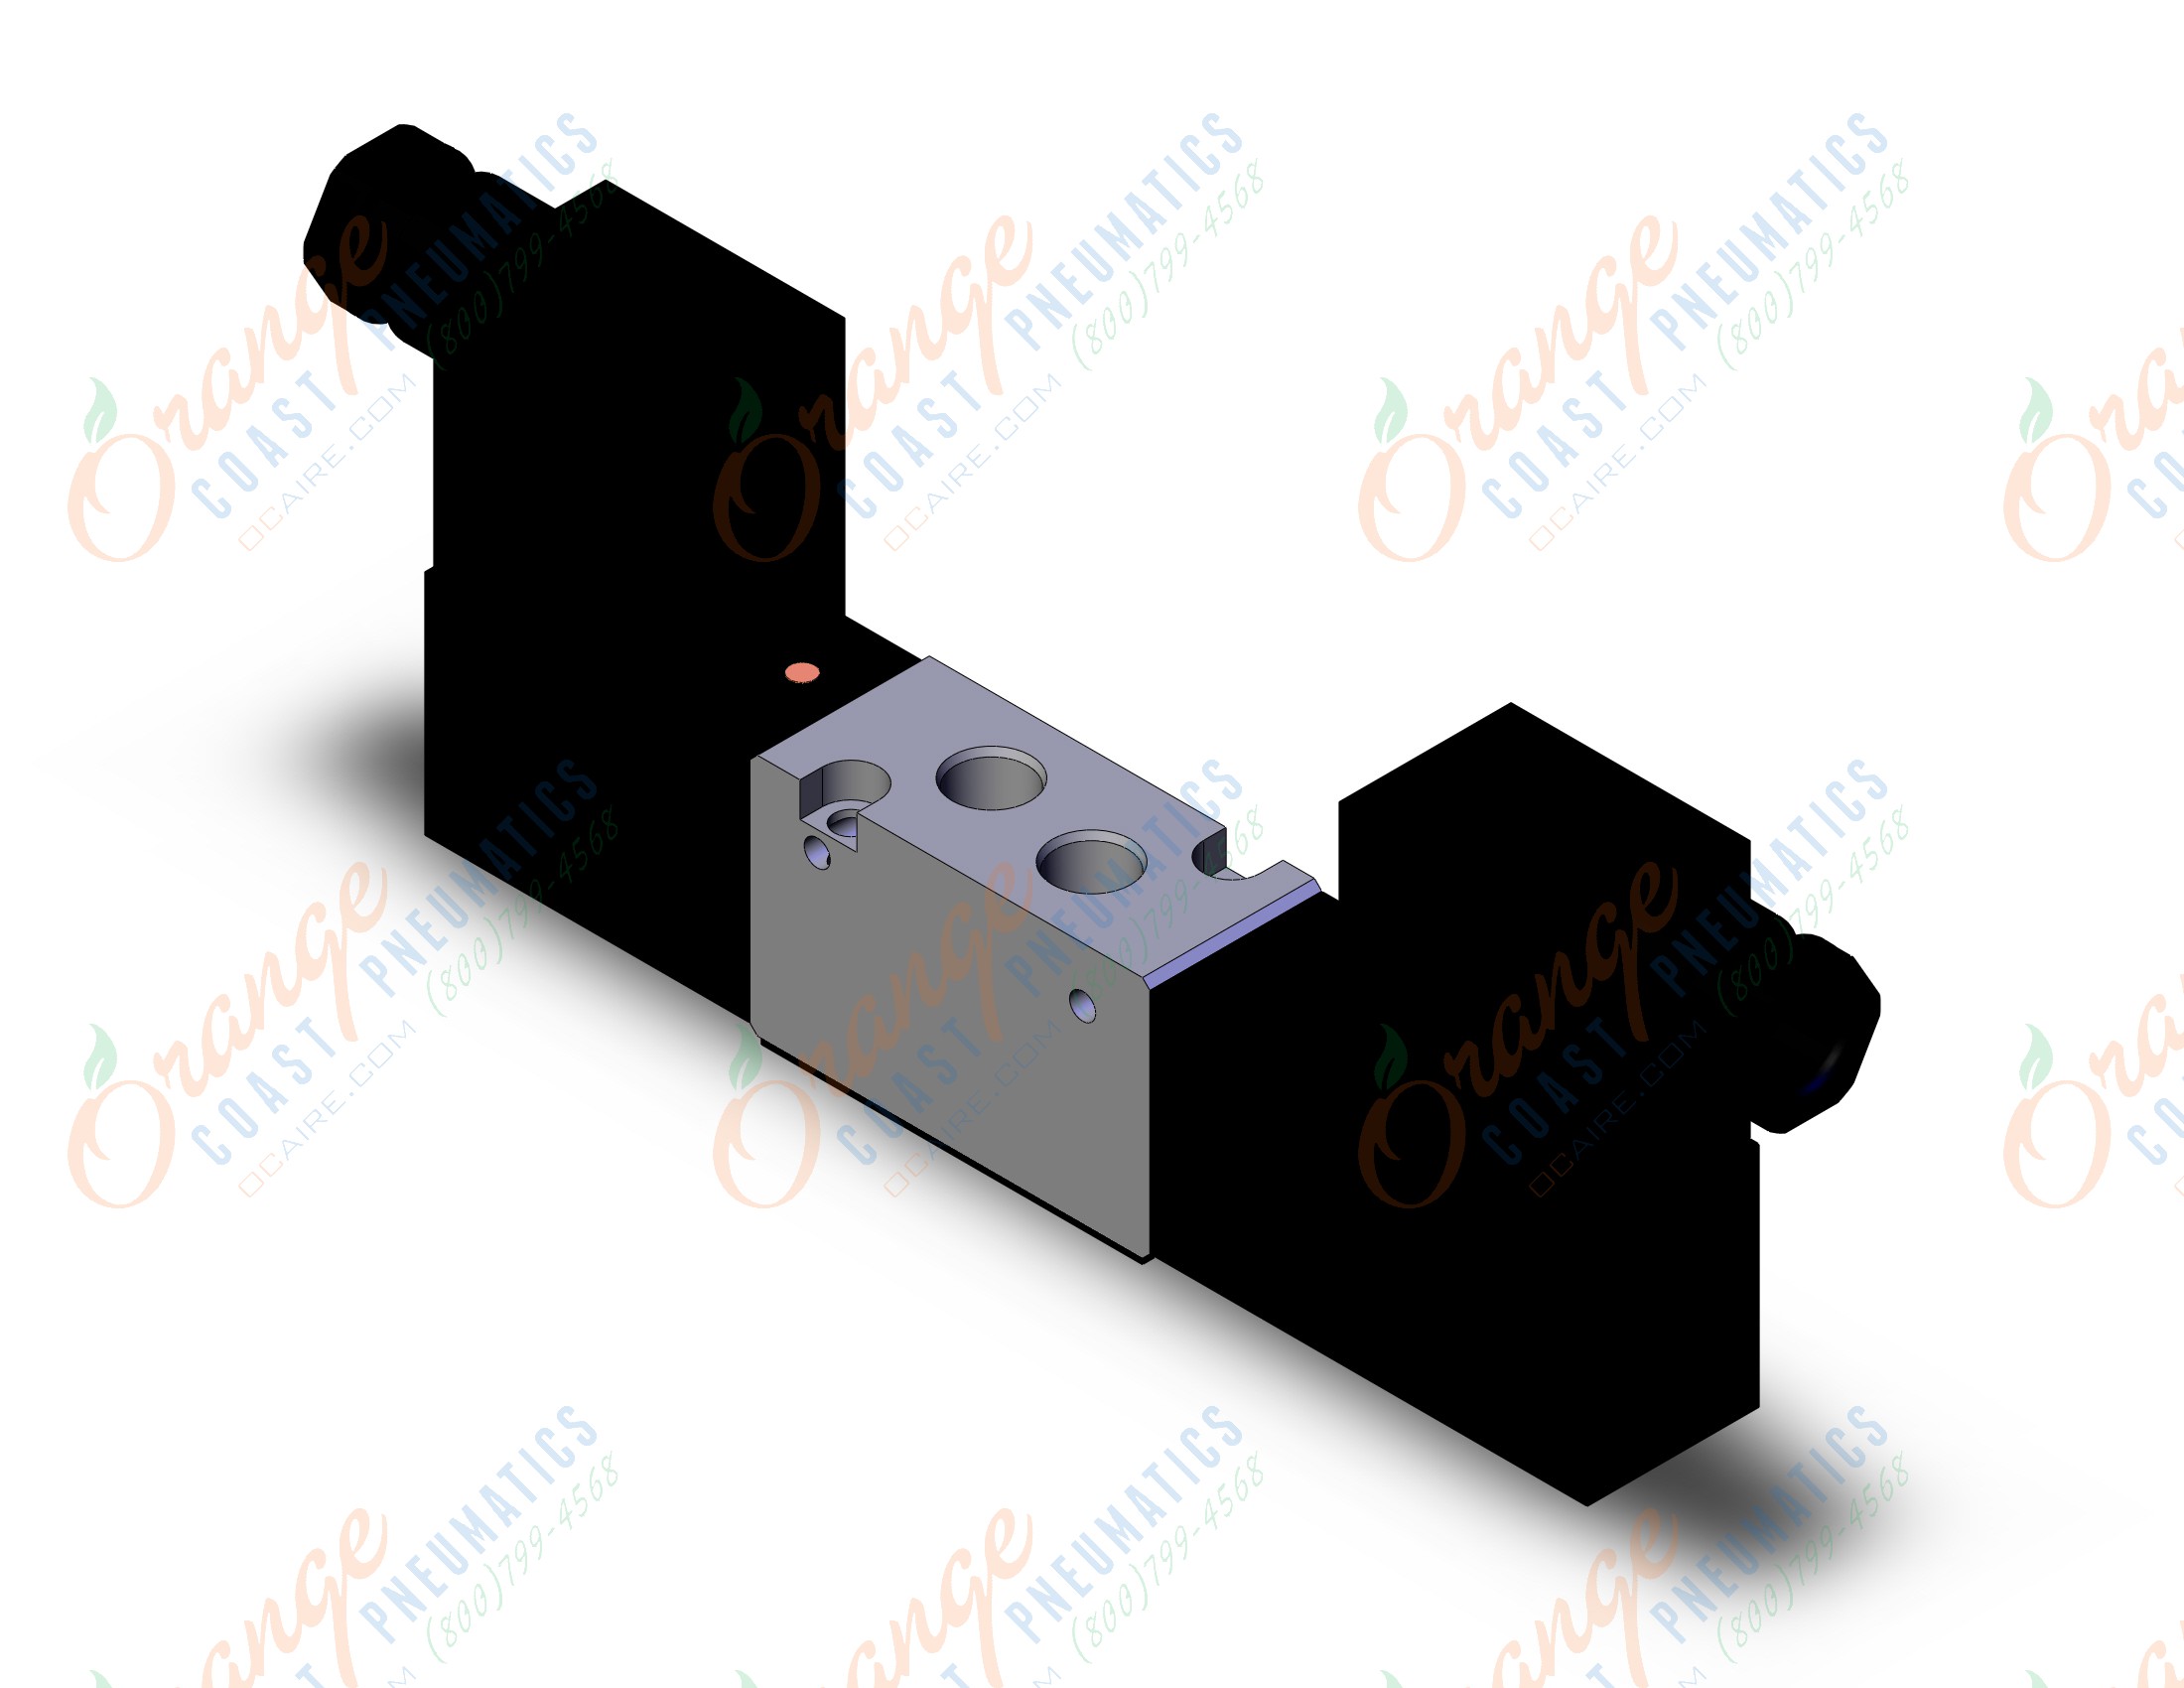 SMC VFS1420-3D-01T valve dbl 1220-1530 body port, VFS1000 SOL VALVE 4/5 PORT